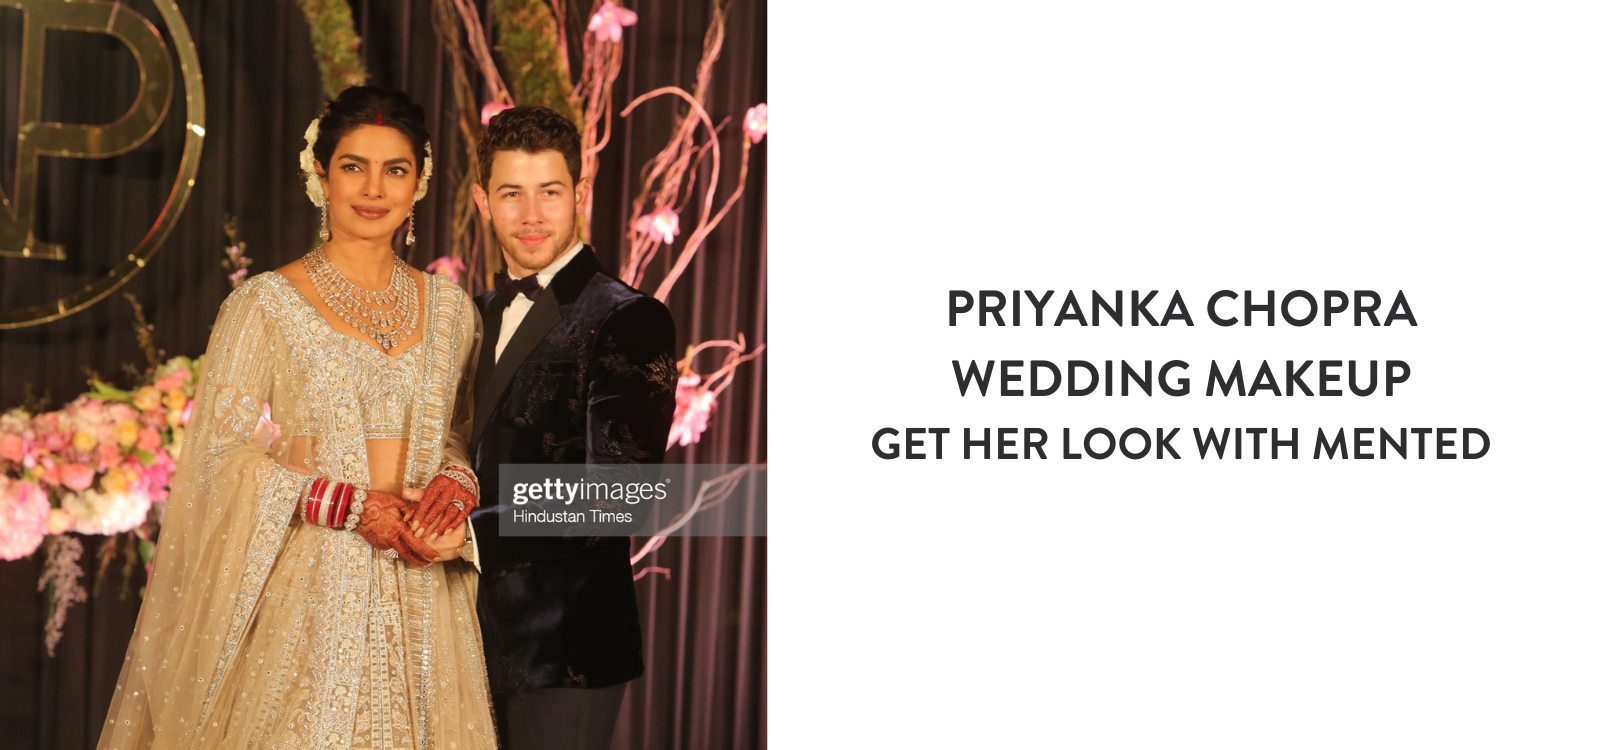 Get the Look: Priyanka Chopra's Wedding